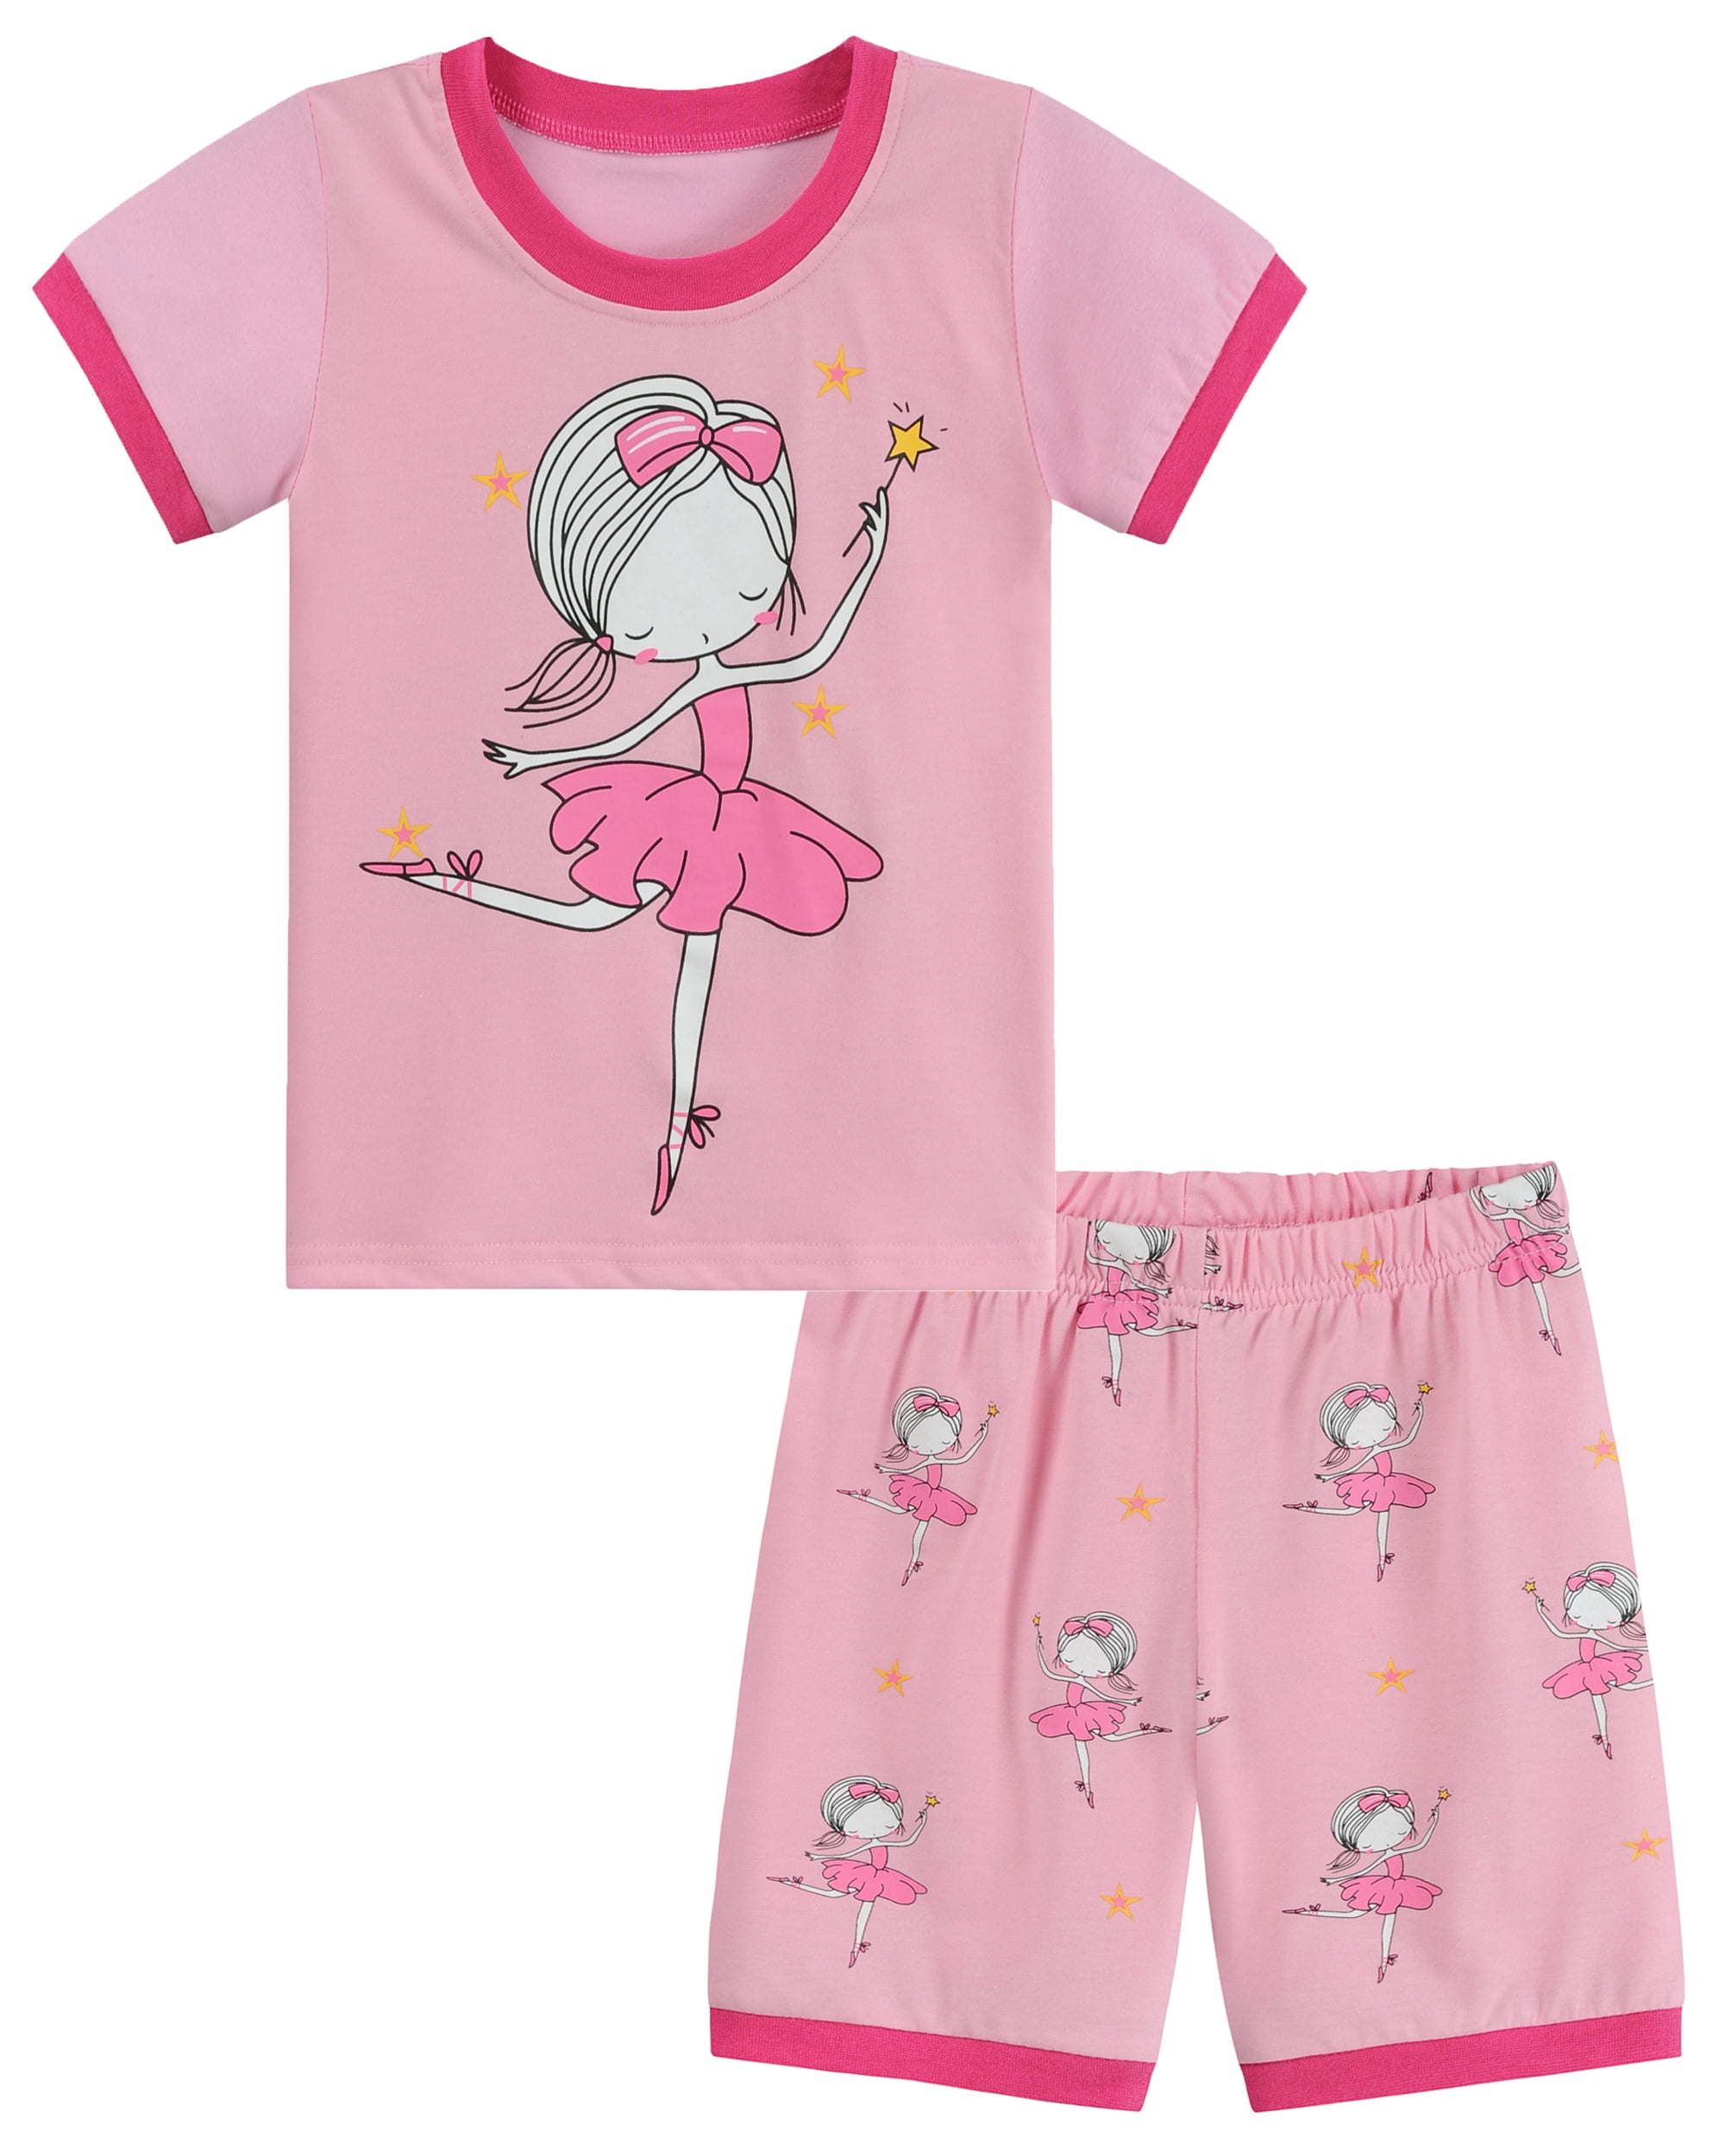 Little Hand Pajamas for Girls Short Sets Kids 100% Cotton Flamingos Sleepwear Toddler Pjs Summer Clothes Shirts